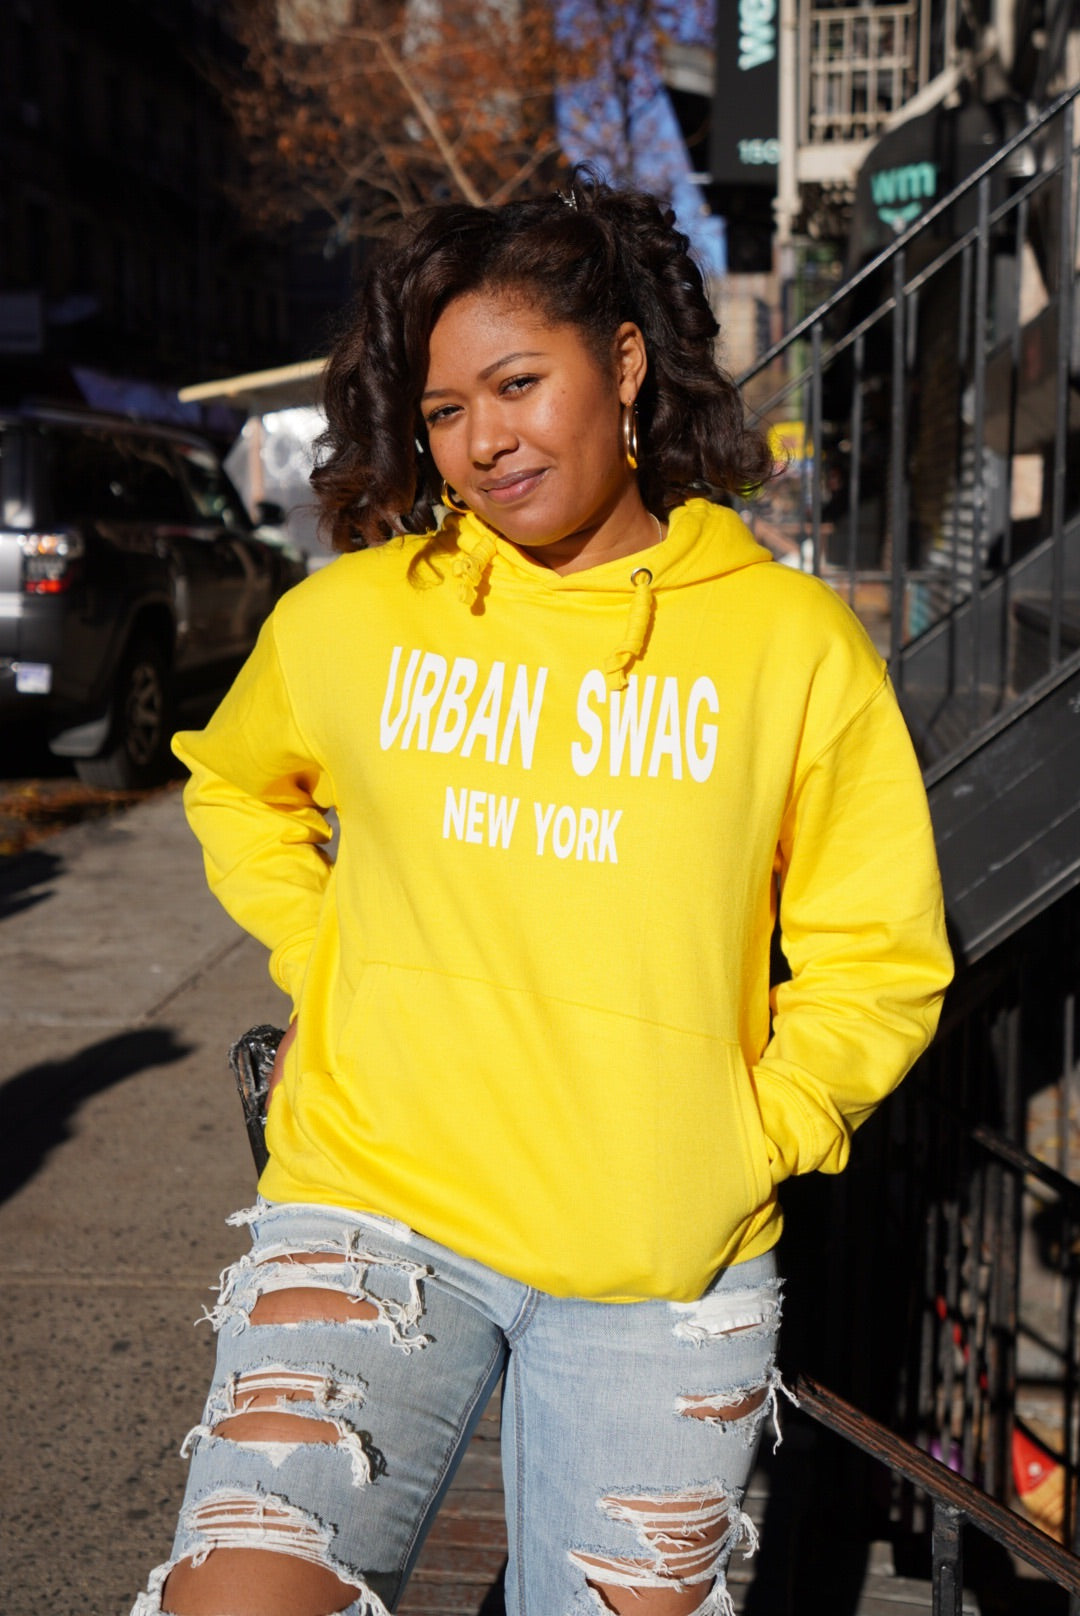 URBAN SWAG NEW YORK HOODY - Urban Swag NYC